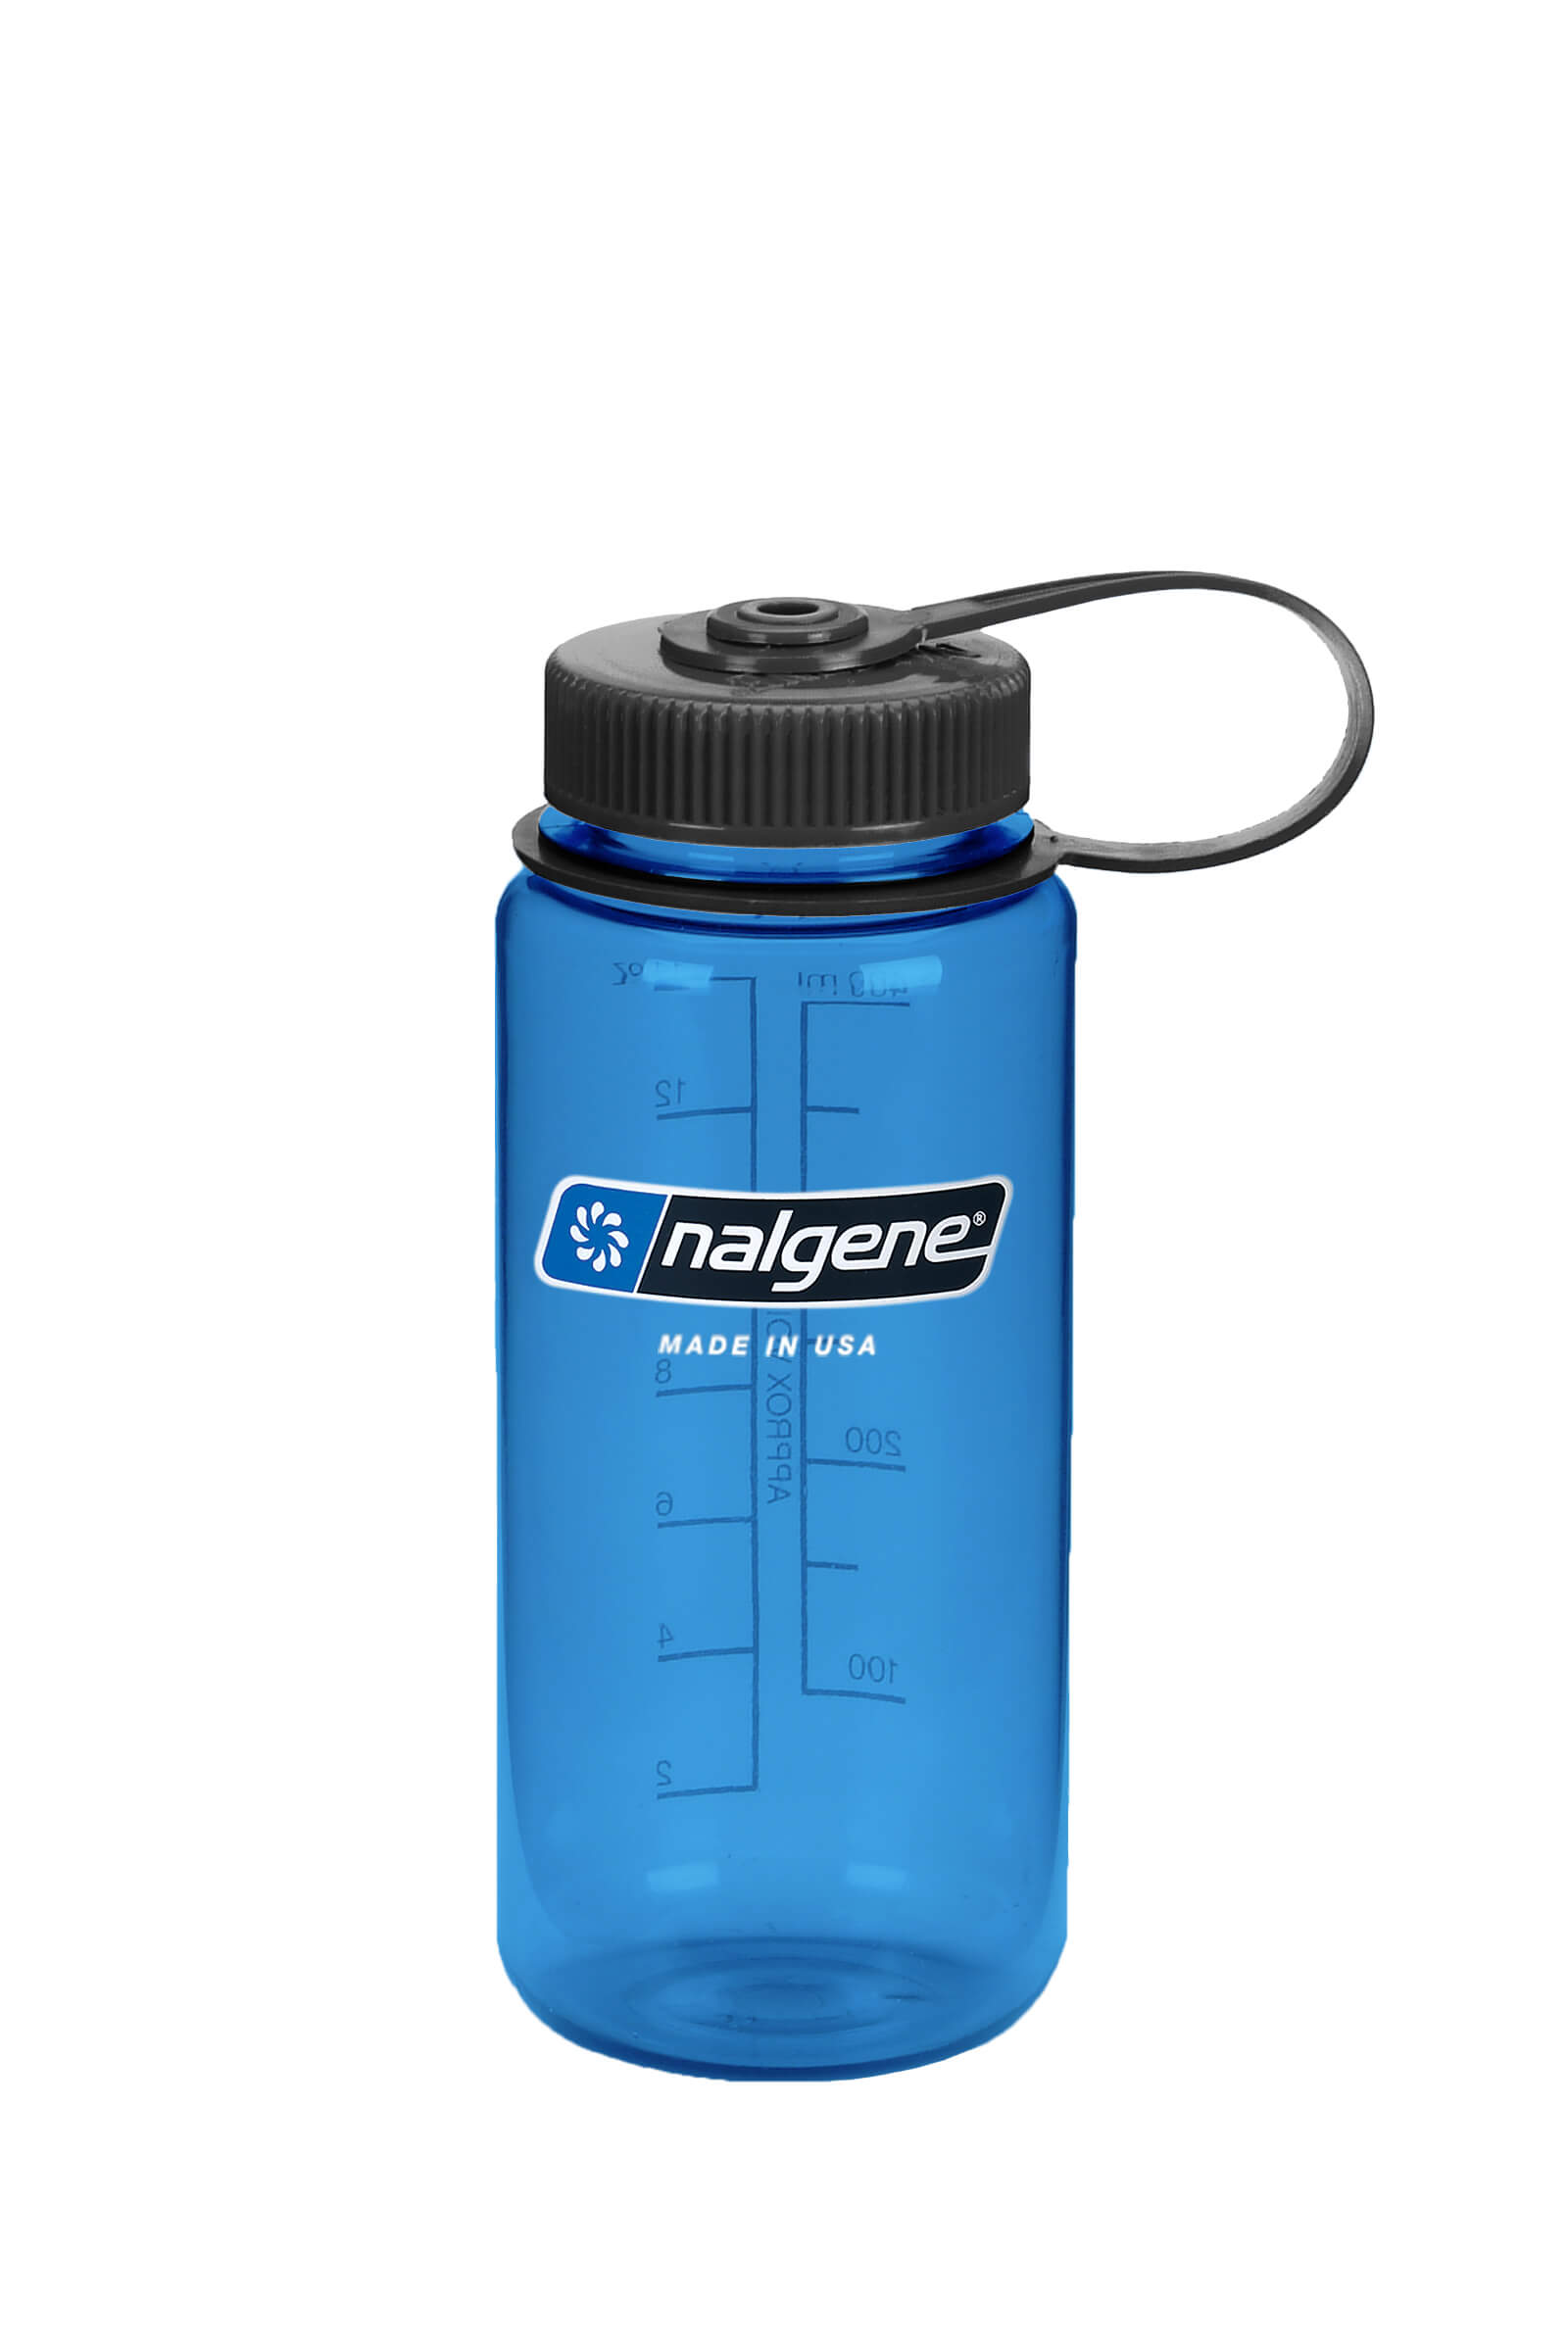 Nalgene Tritan Wide Mouth Water BPA-Free Water Bottle 32oz Red Bottle with Black Cap Set of 2